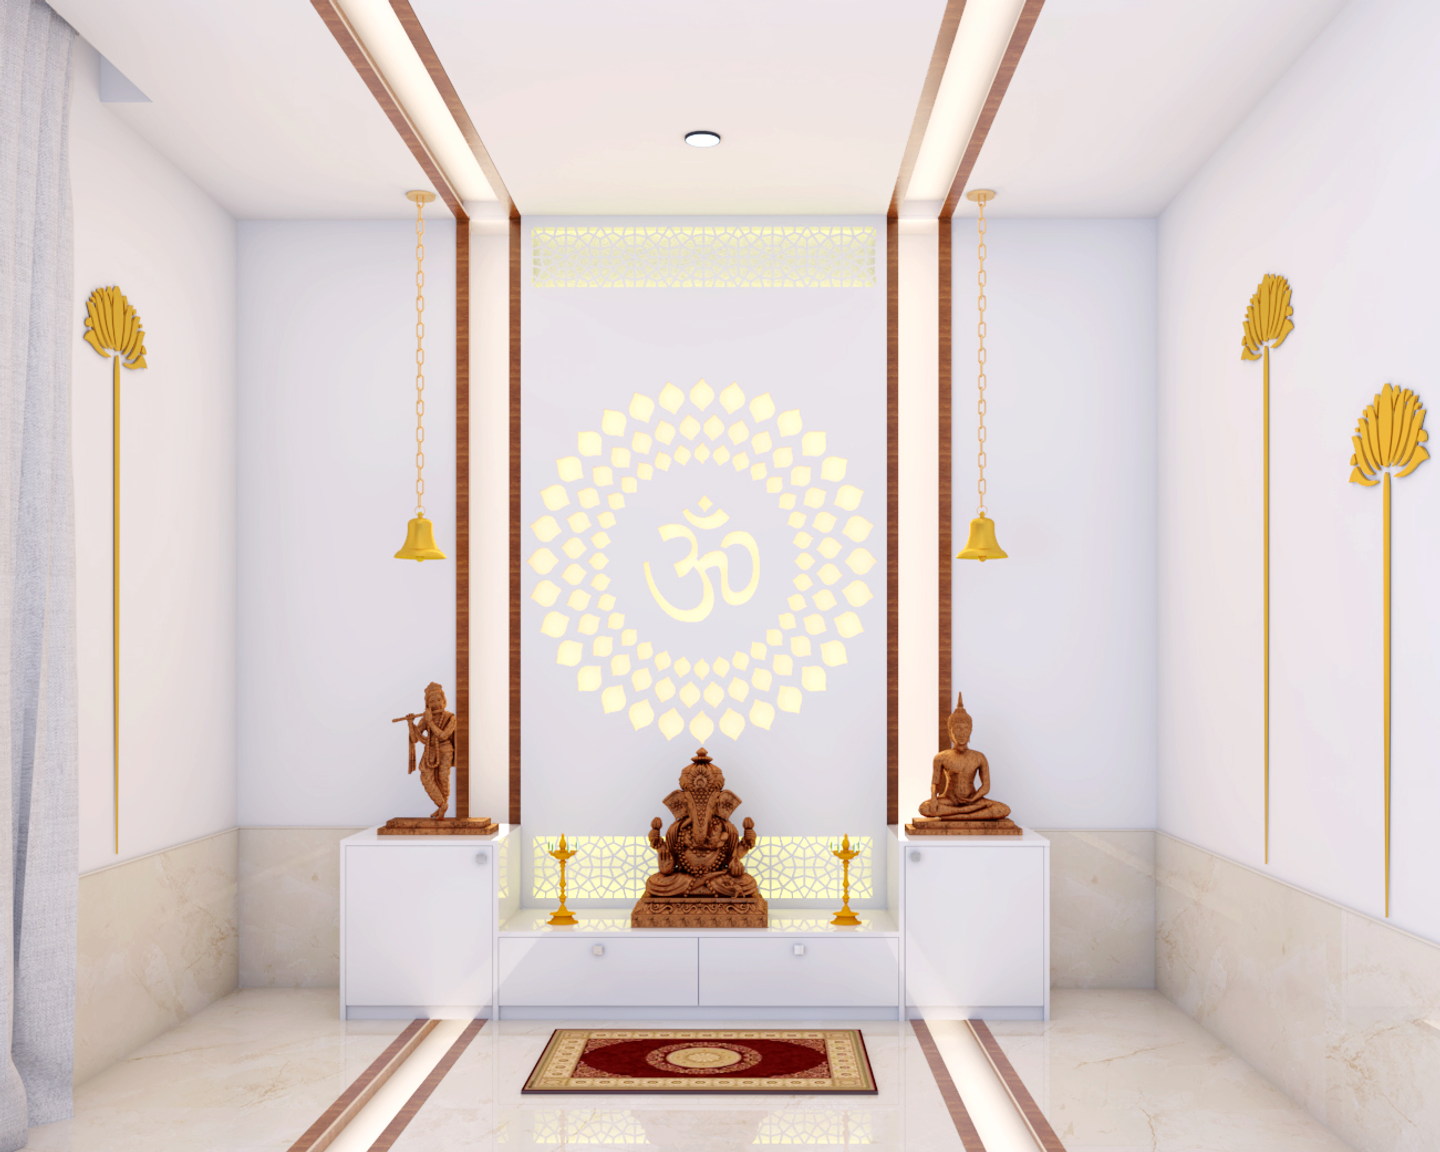 Modern Pooja Room Design For Rental Purposes - Livspace